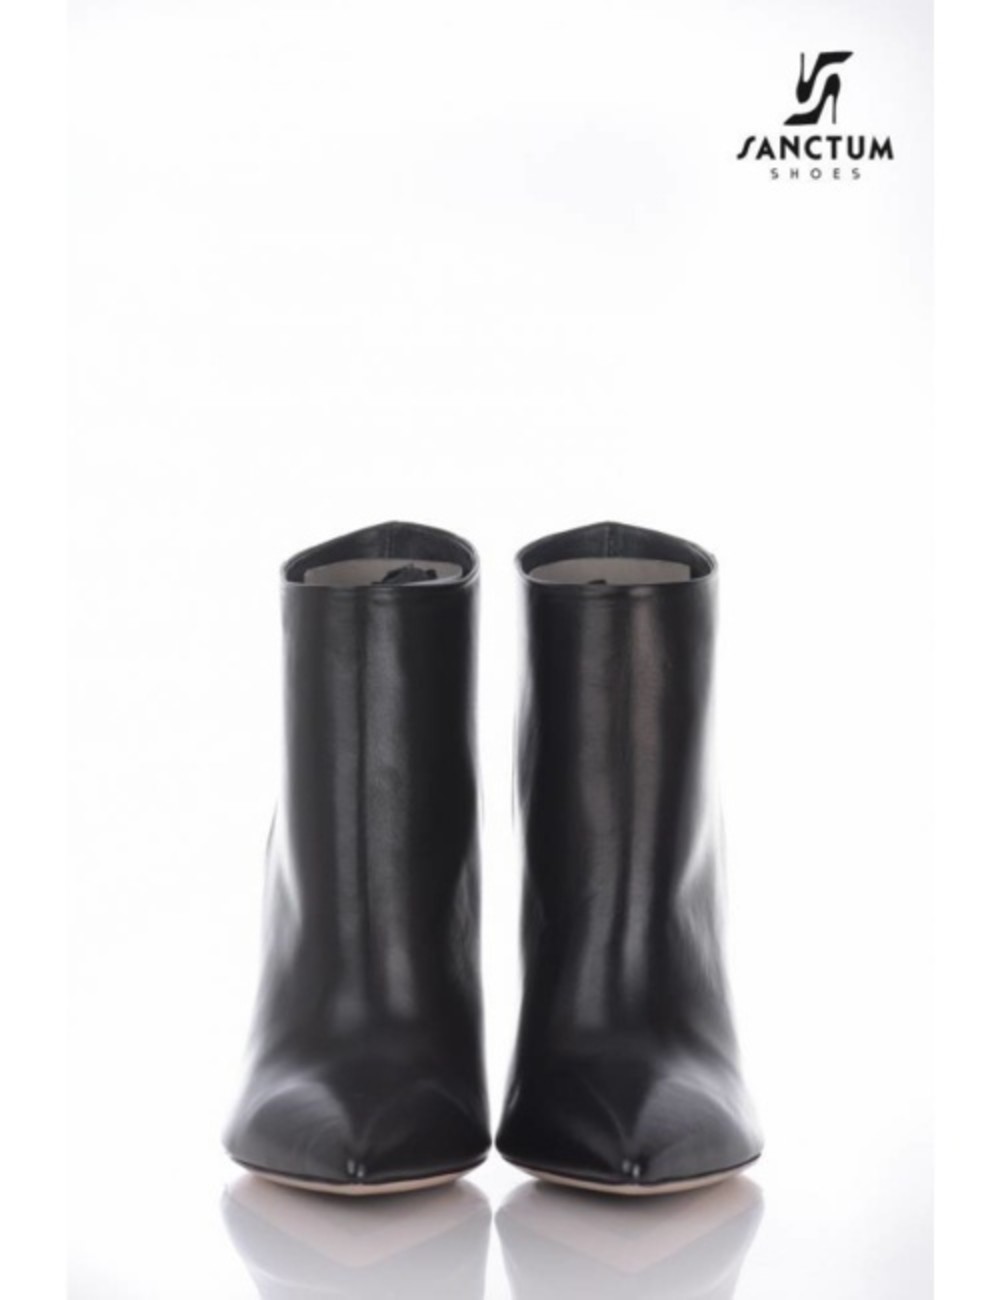 Sanctum Shoes Italian leather ankle boots a2312 black nappa